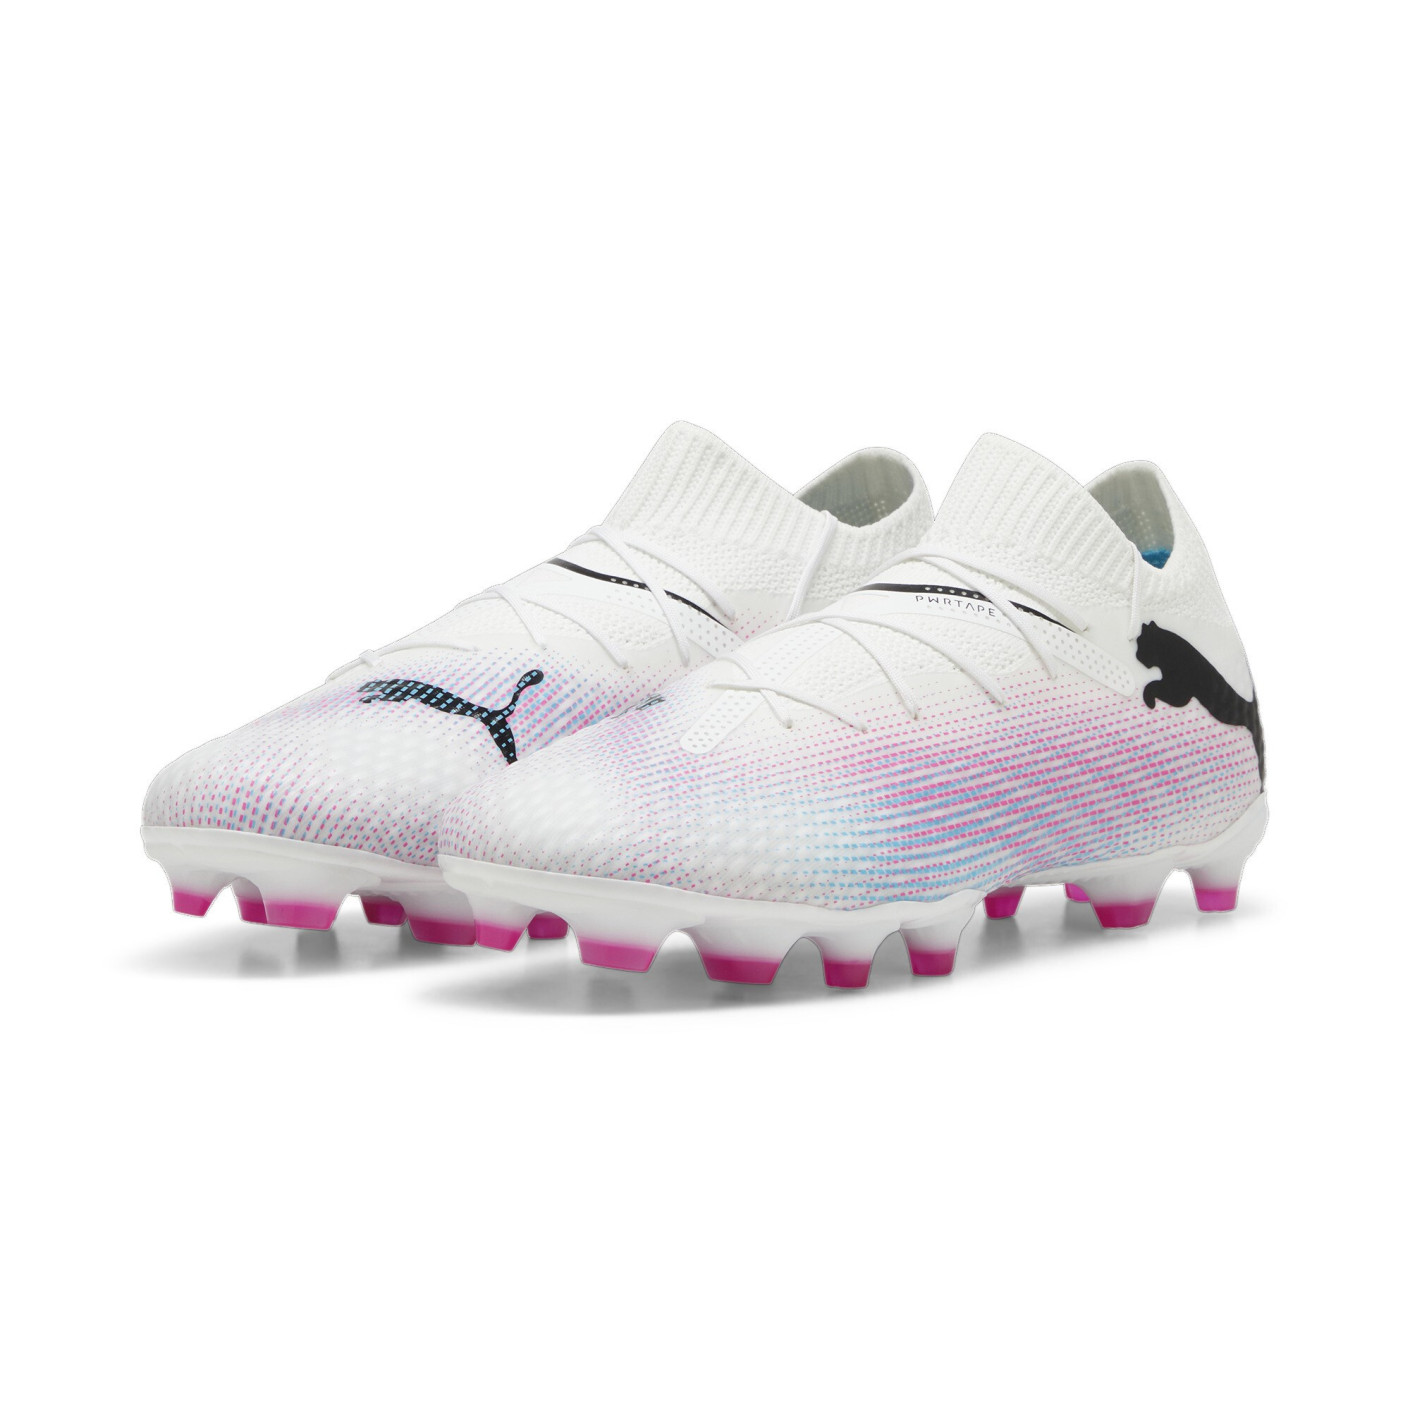 PUMA Future 7 Pro Gazon Naturel Gazon Artificiel Chaussures de Foot (MG) Blanc Rose Noir